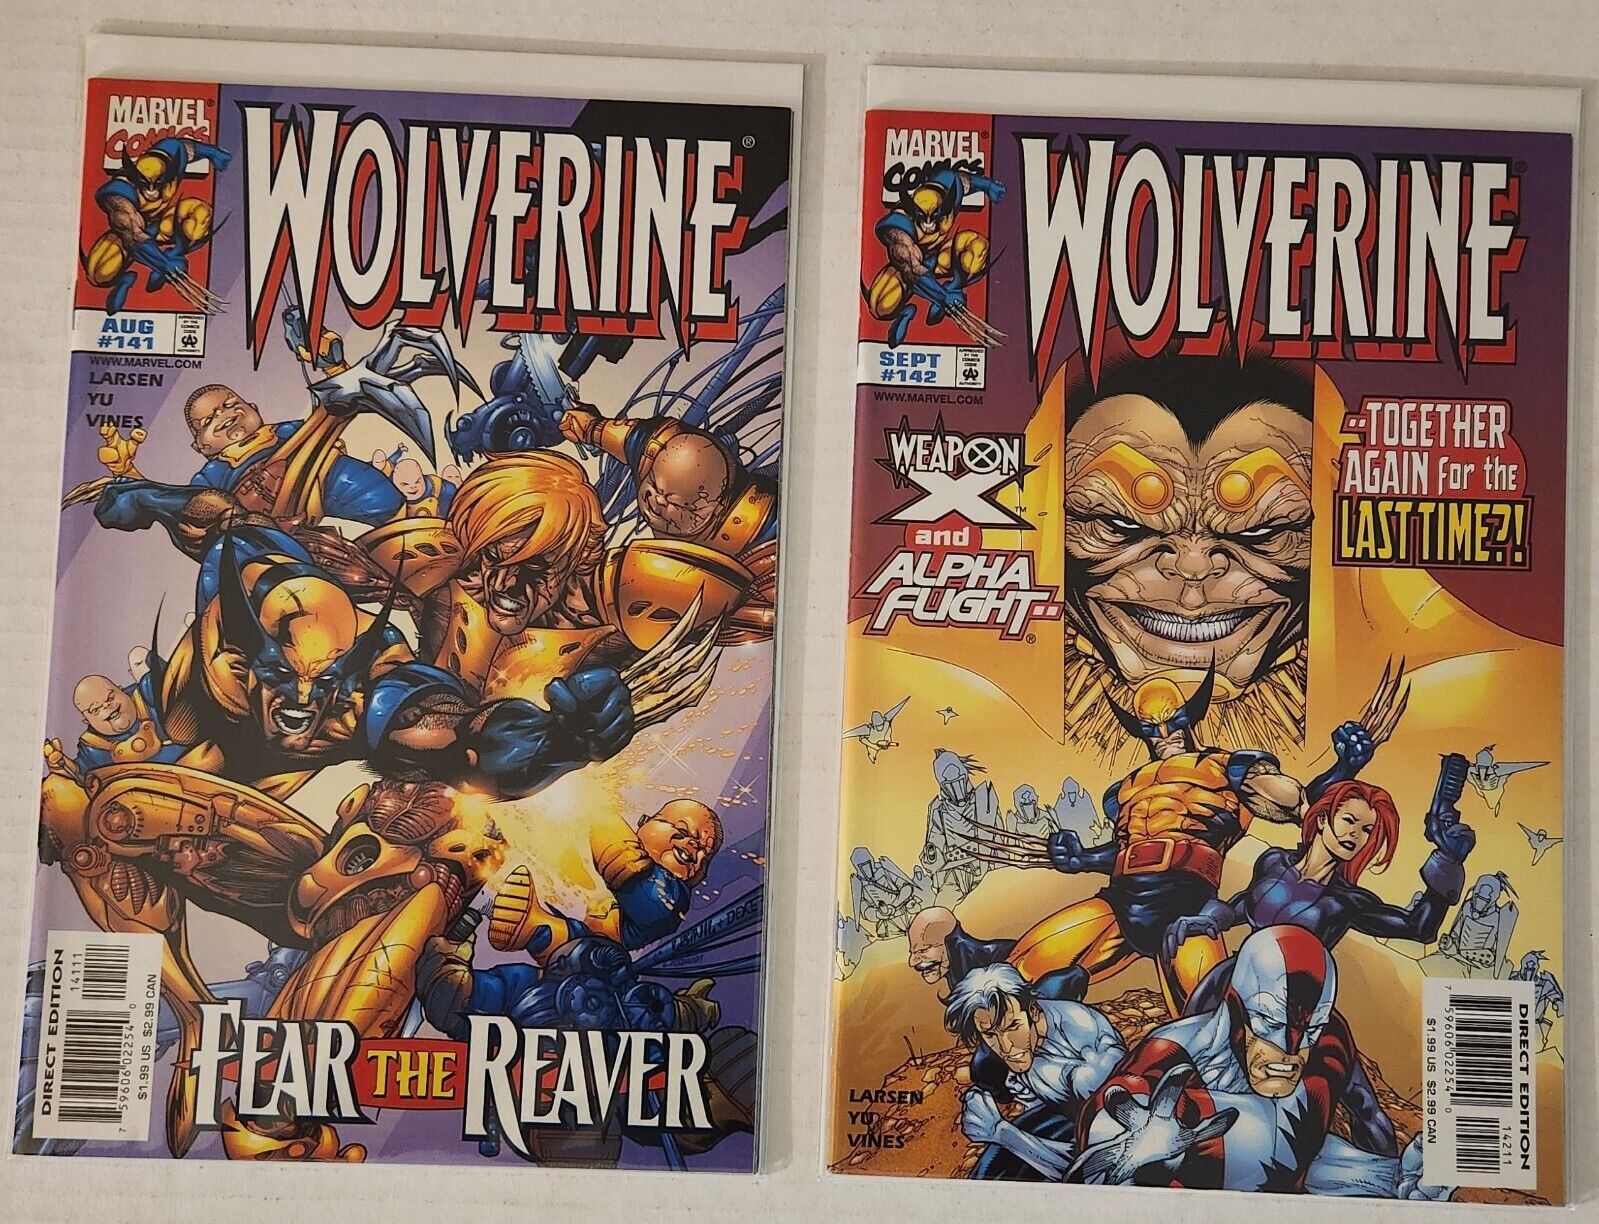 Wolverine (vol. 2) #141-150 (Marvel Comics 1999-2000) 10 issue run